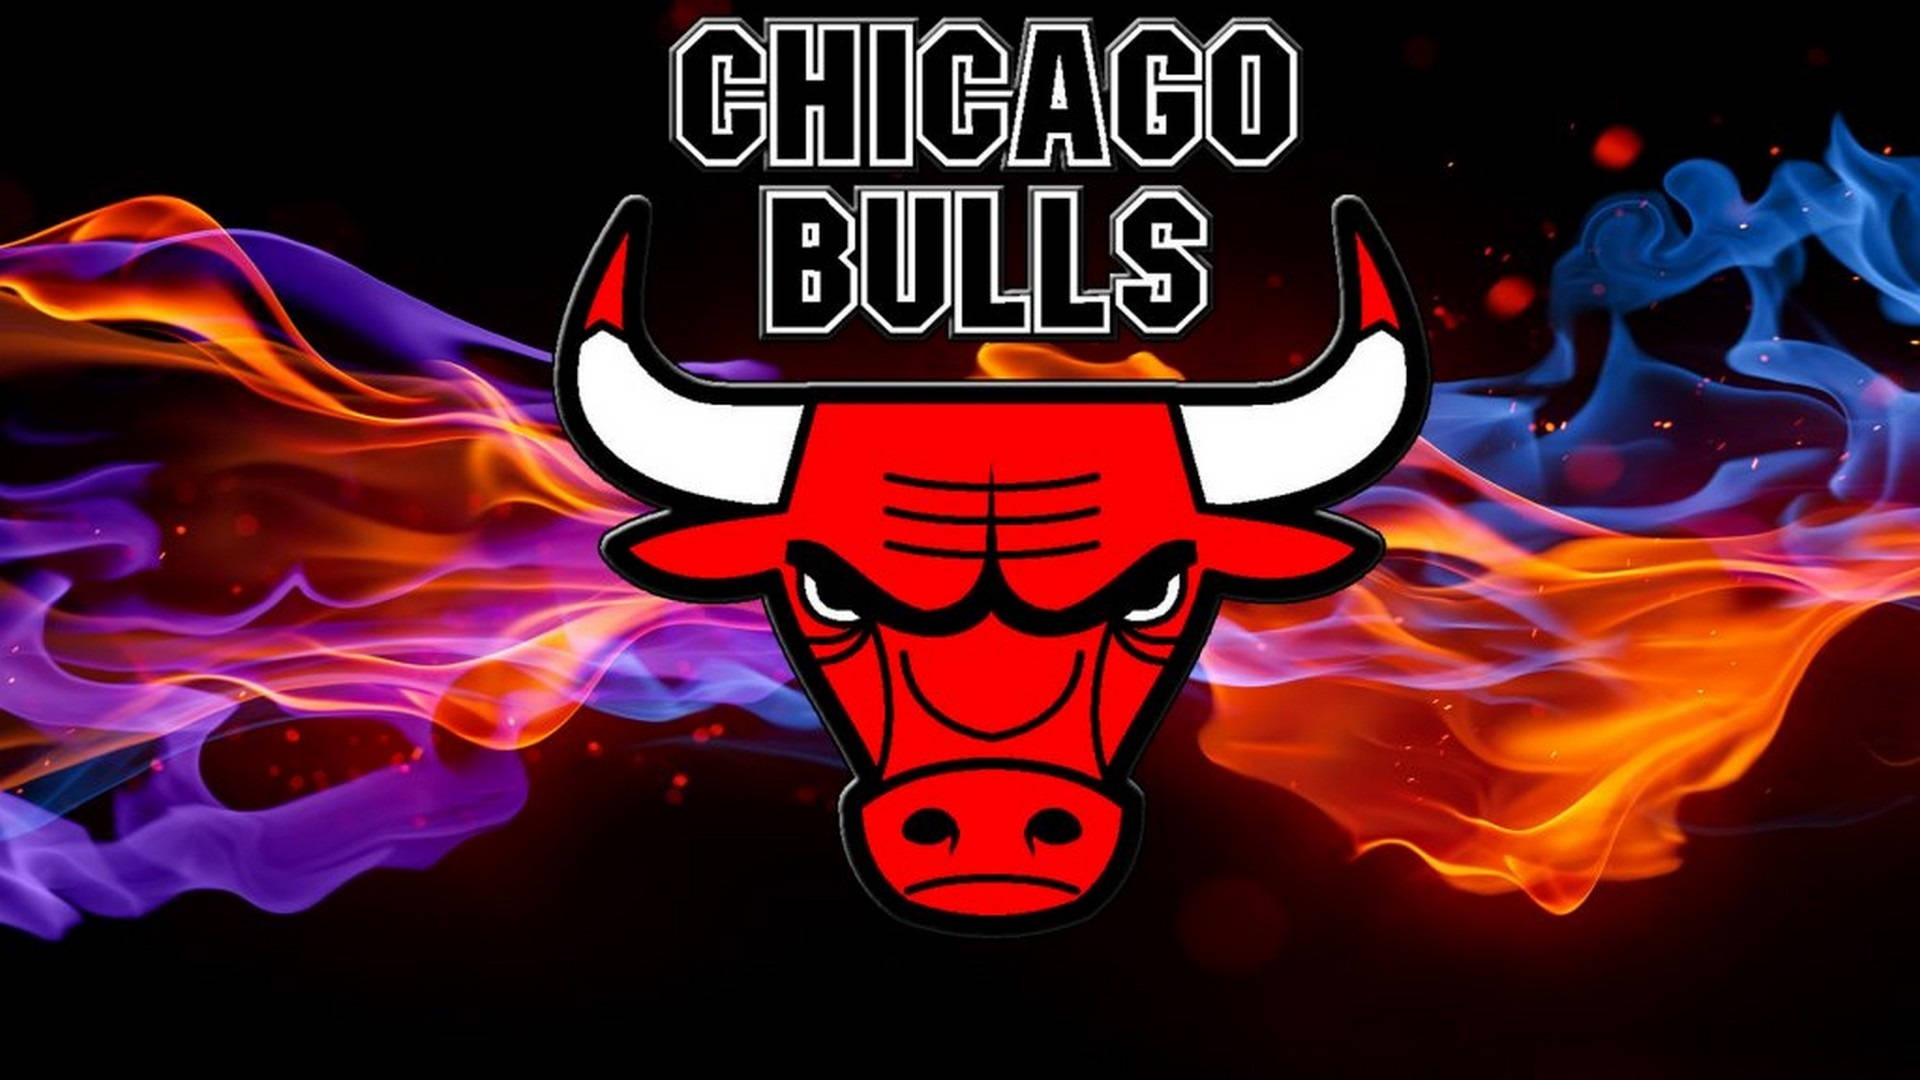 Chicago Bulls Stylised Bull Illustration Background